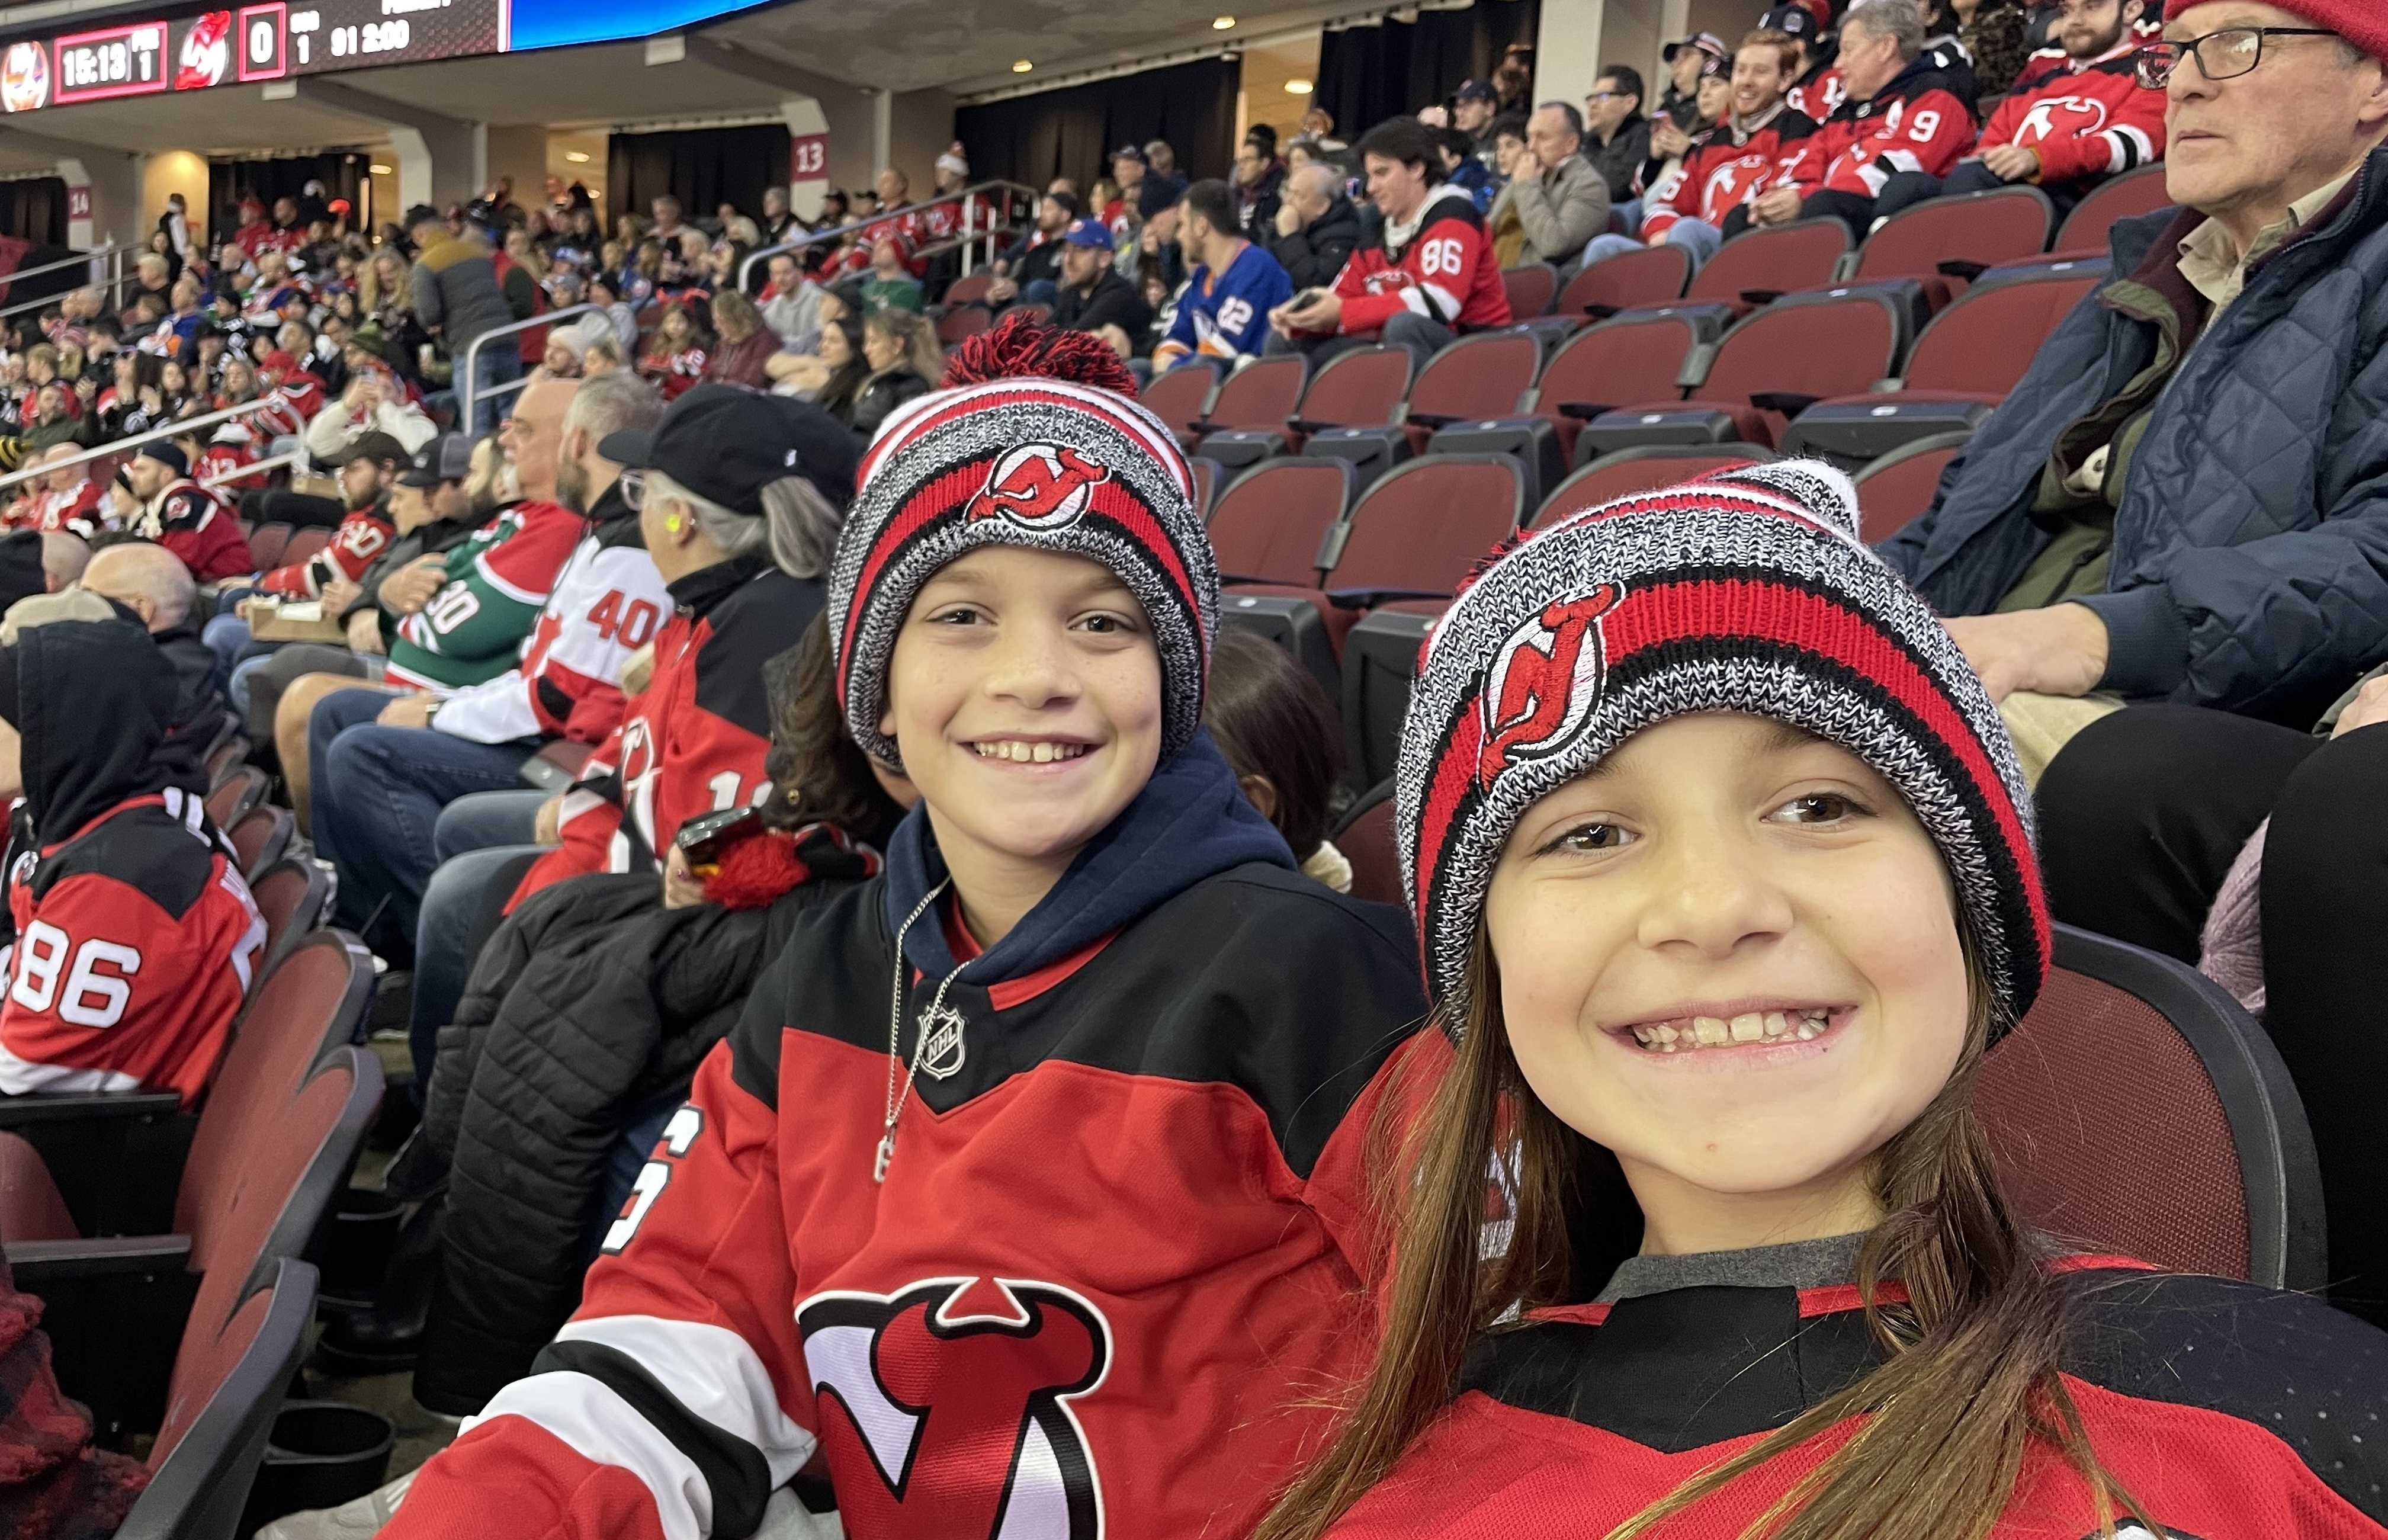 New Jersey Devils - NHL vs New York Islanders